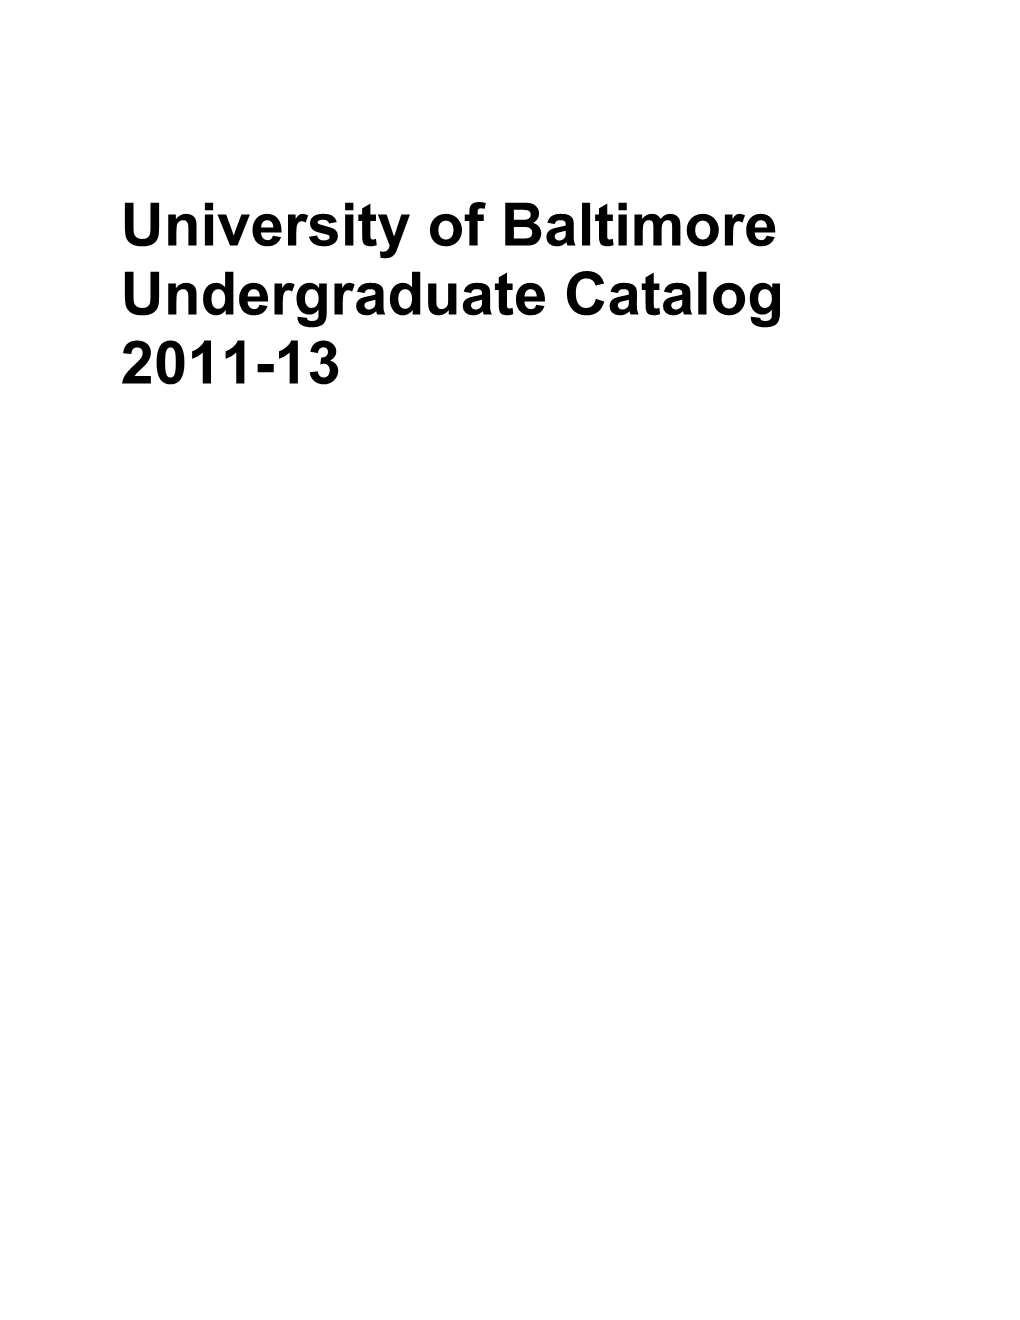 University of Baltimore Undergraduate Catalog 2011-13